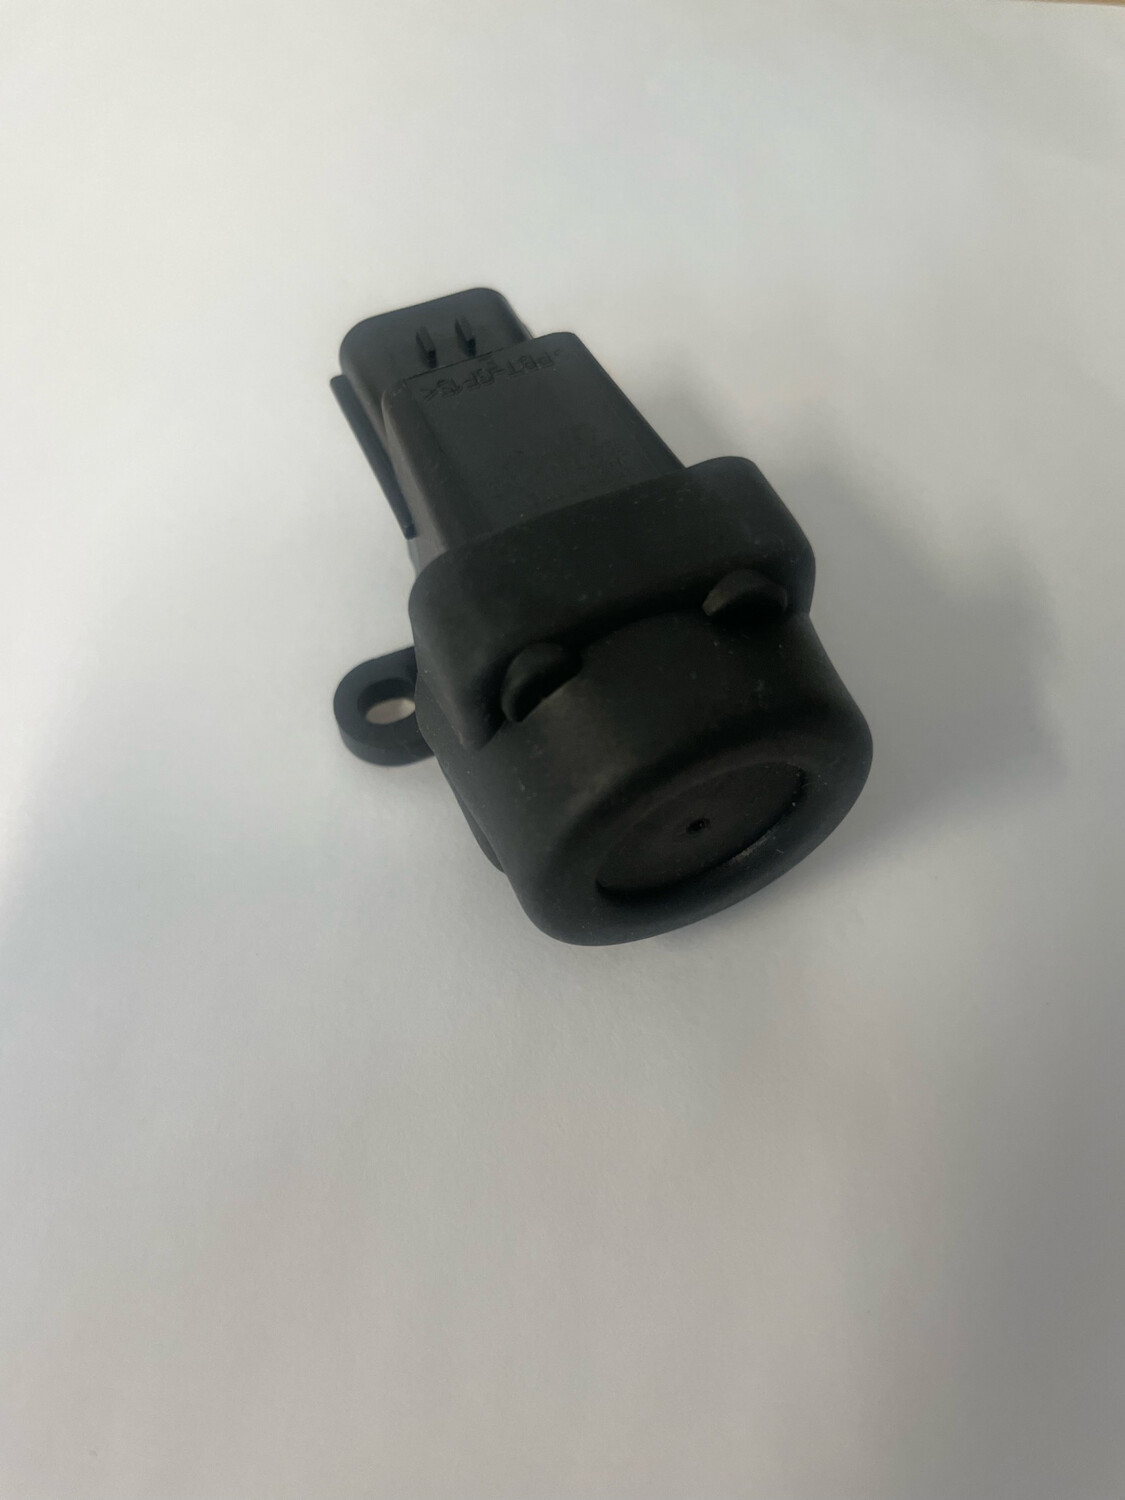 New Vx220 Lotus Fuel Pump Inertia Switch